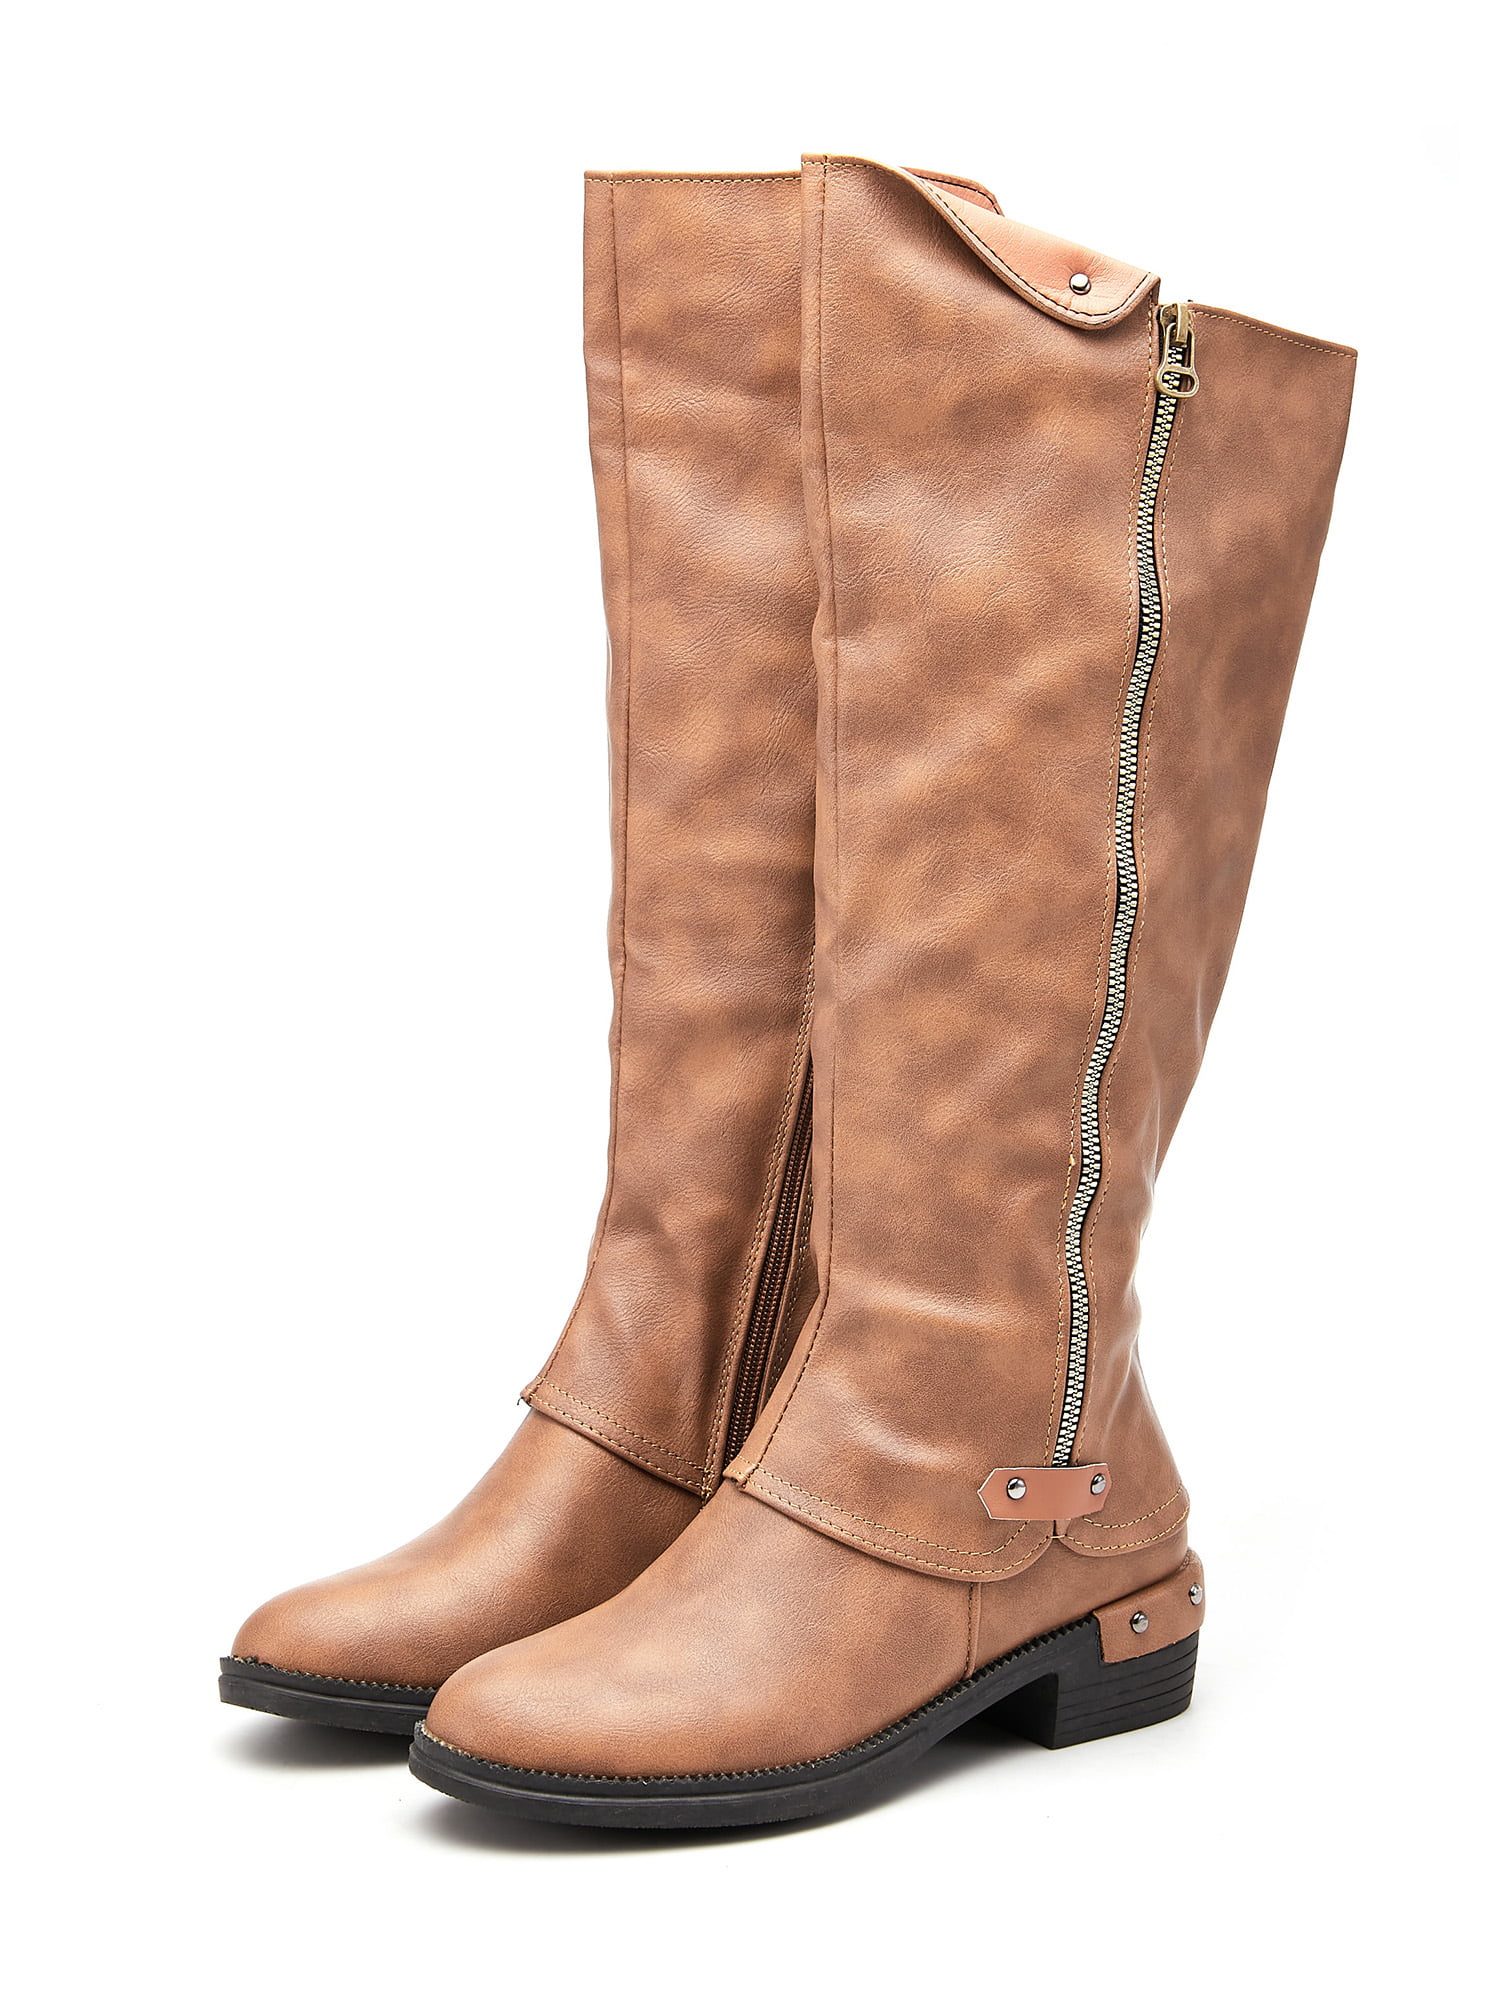 TOETOS Women's Fashion Flats zipper Knee High Riding Boots Wide-Calf available 